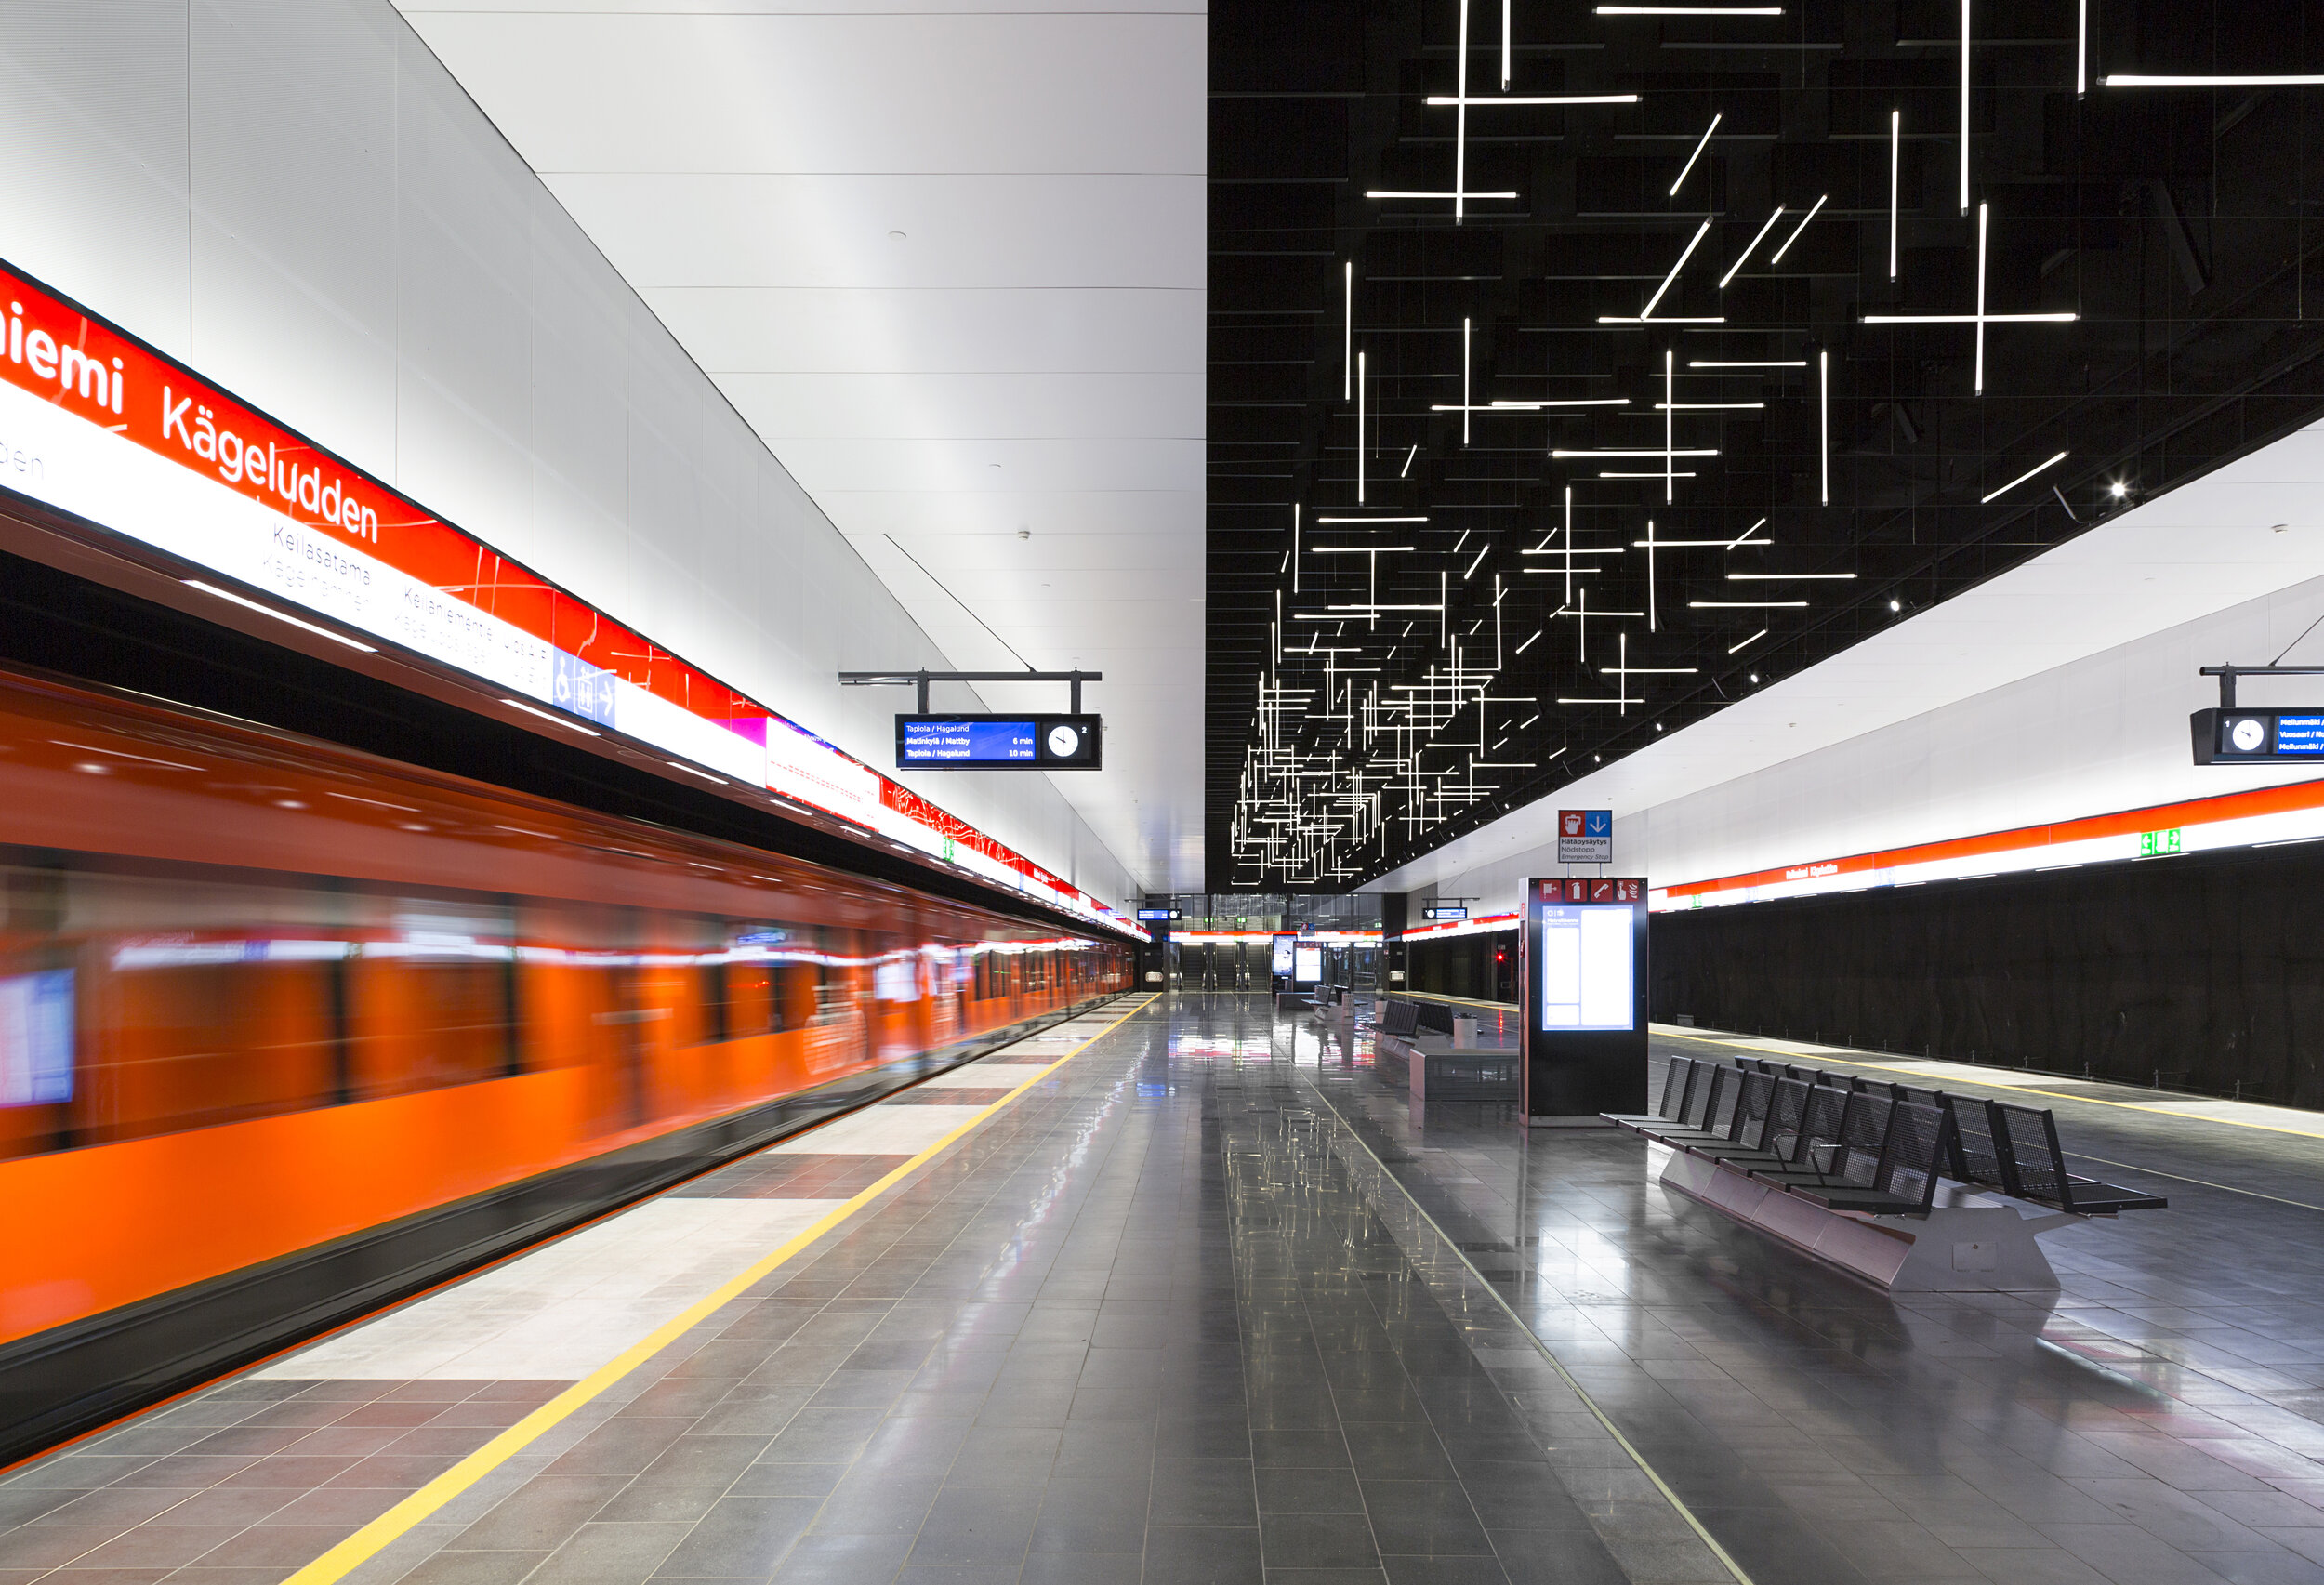 Helsinki Metro Station Keilaniemi by Petri Vuorio.jpg